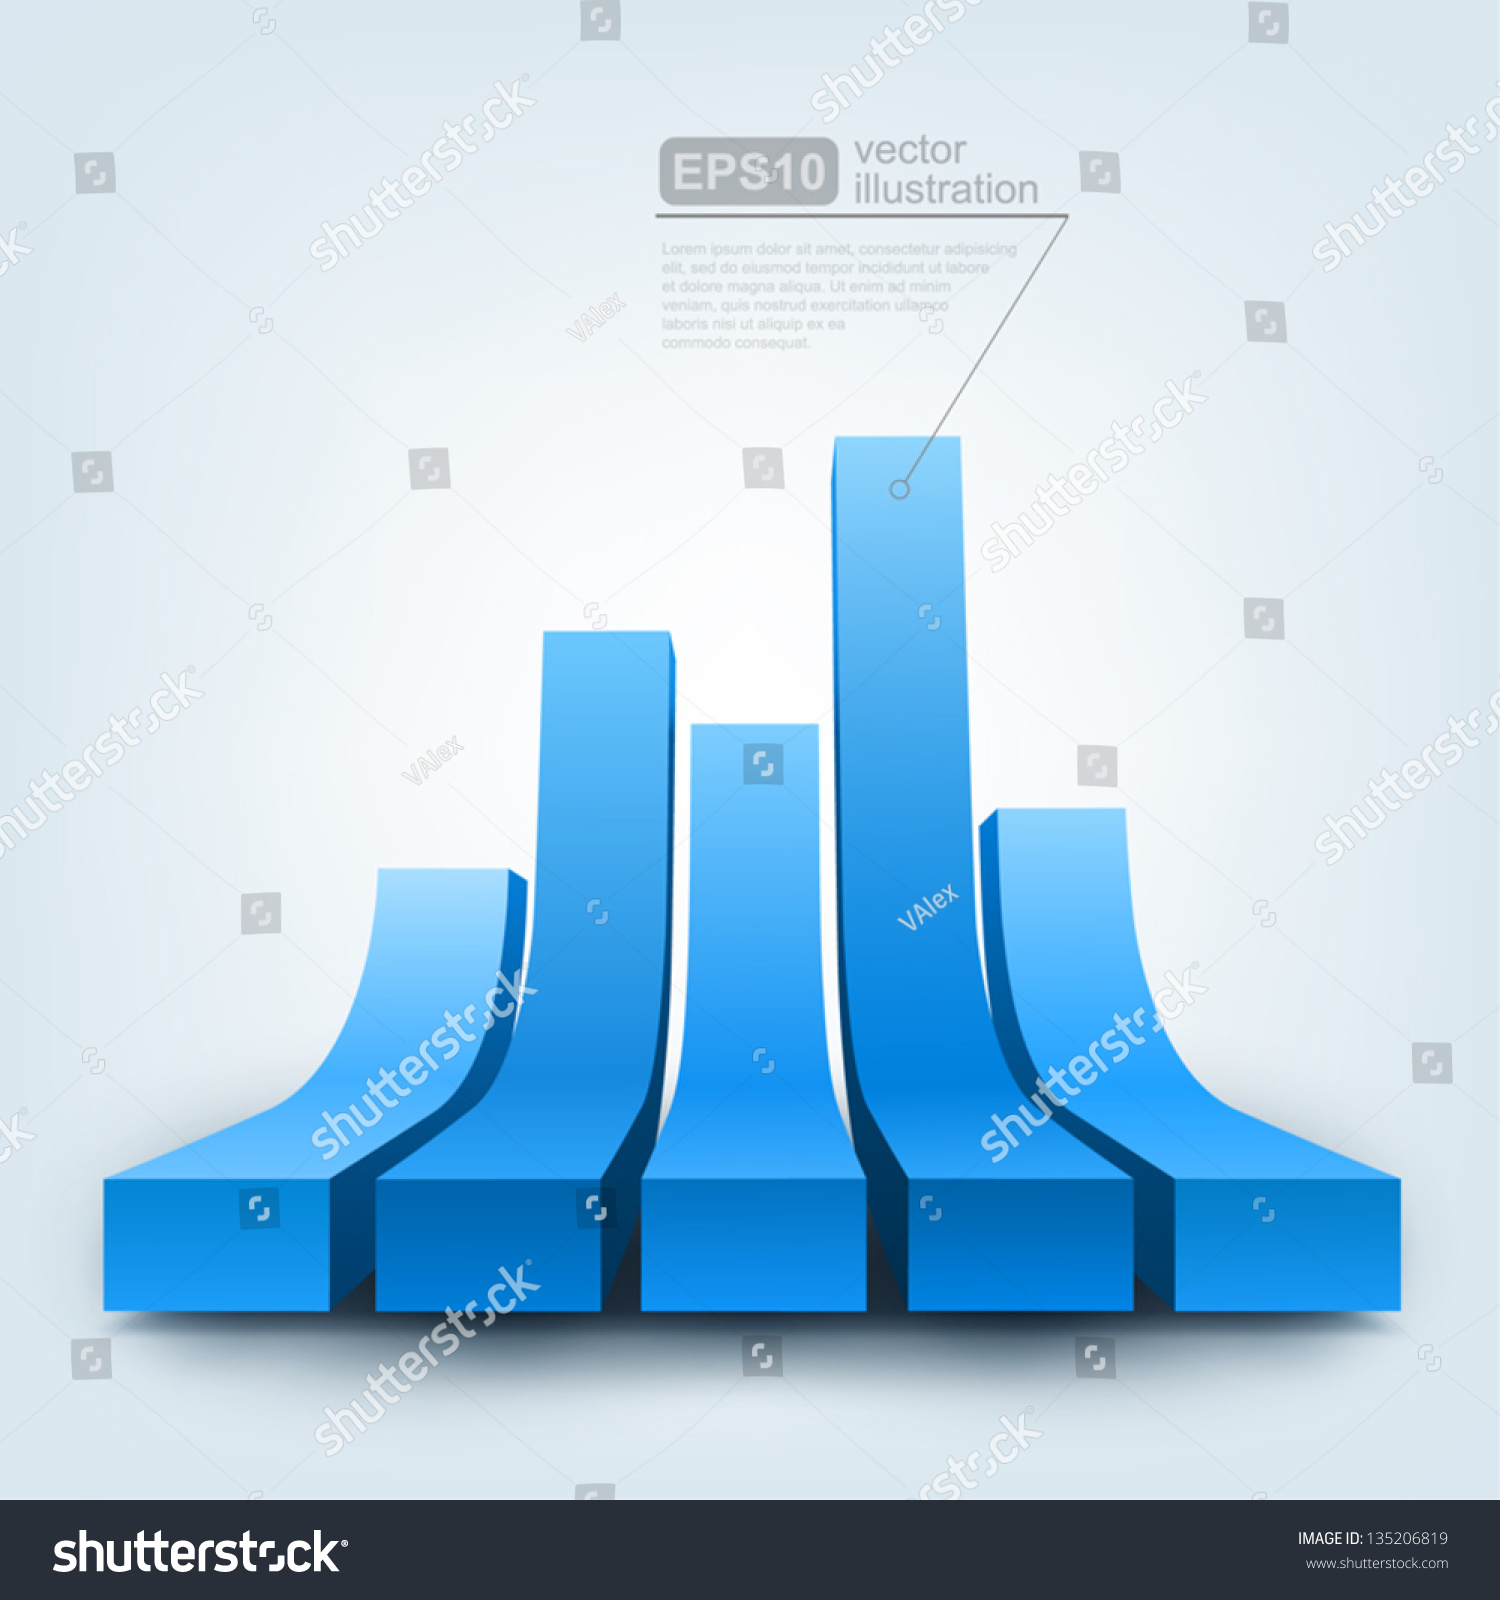 Vector Illustration Of 3d Graph - 135206819 : Shutterstock